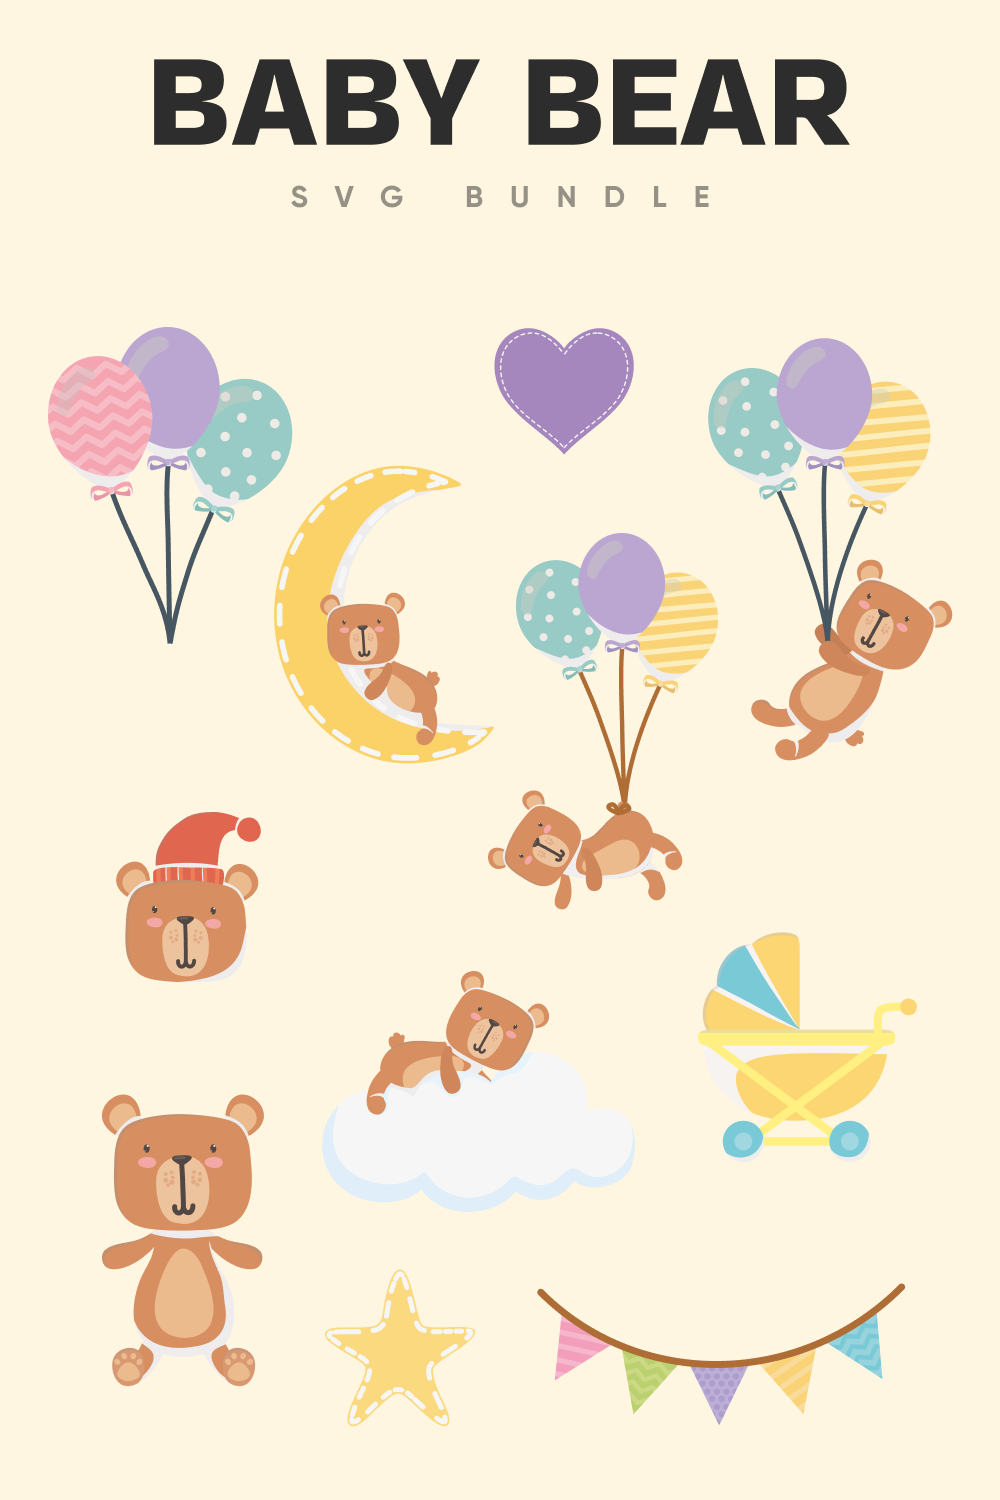 Baby bear SVG bundle.